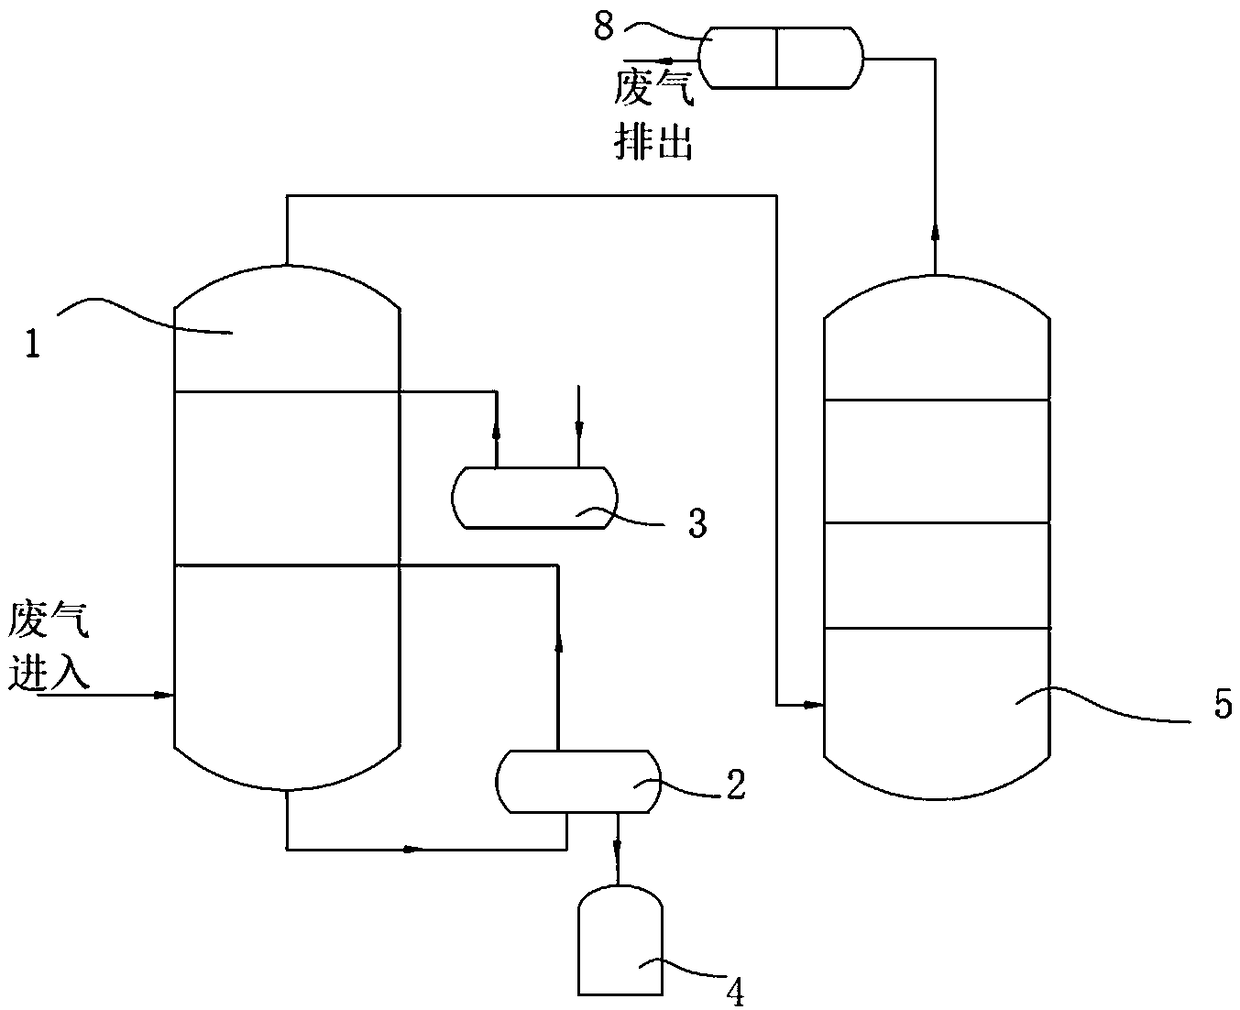 Purification treatment method of volatile organic compounds (VOCs) waste gas